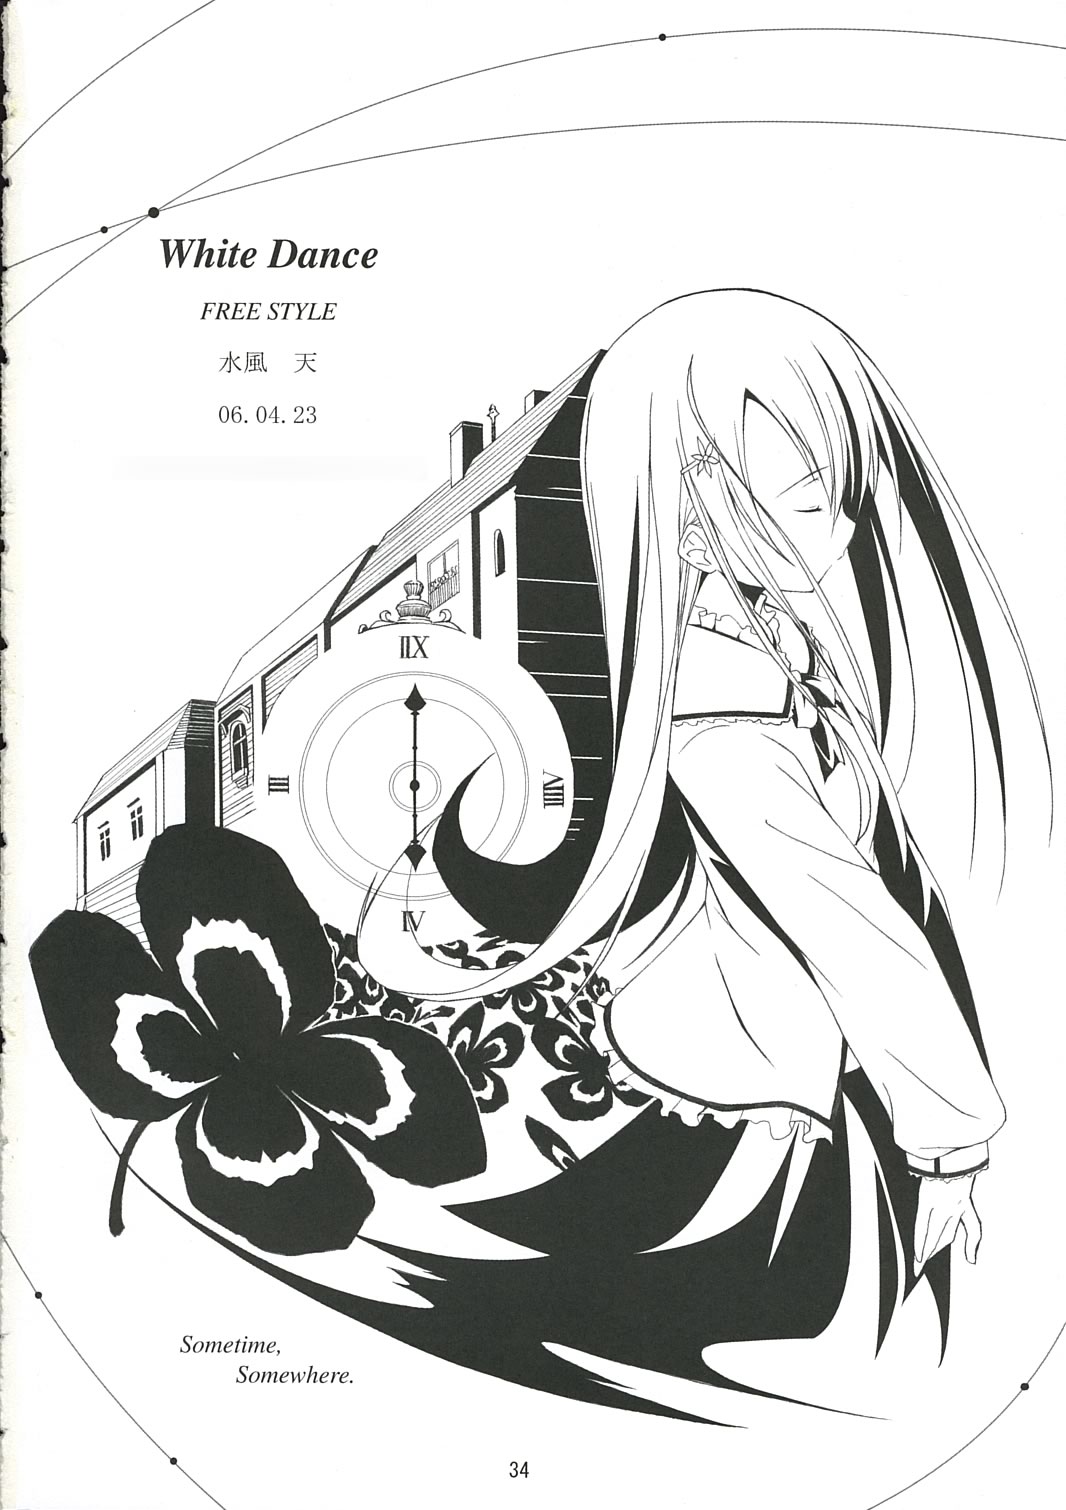 [Free Style] White Dance (To Heart 2, Kamicyu) 